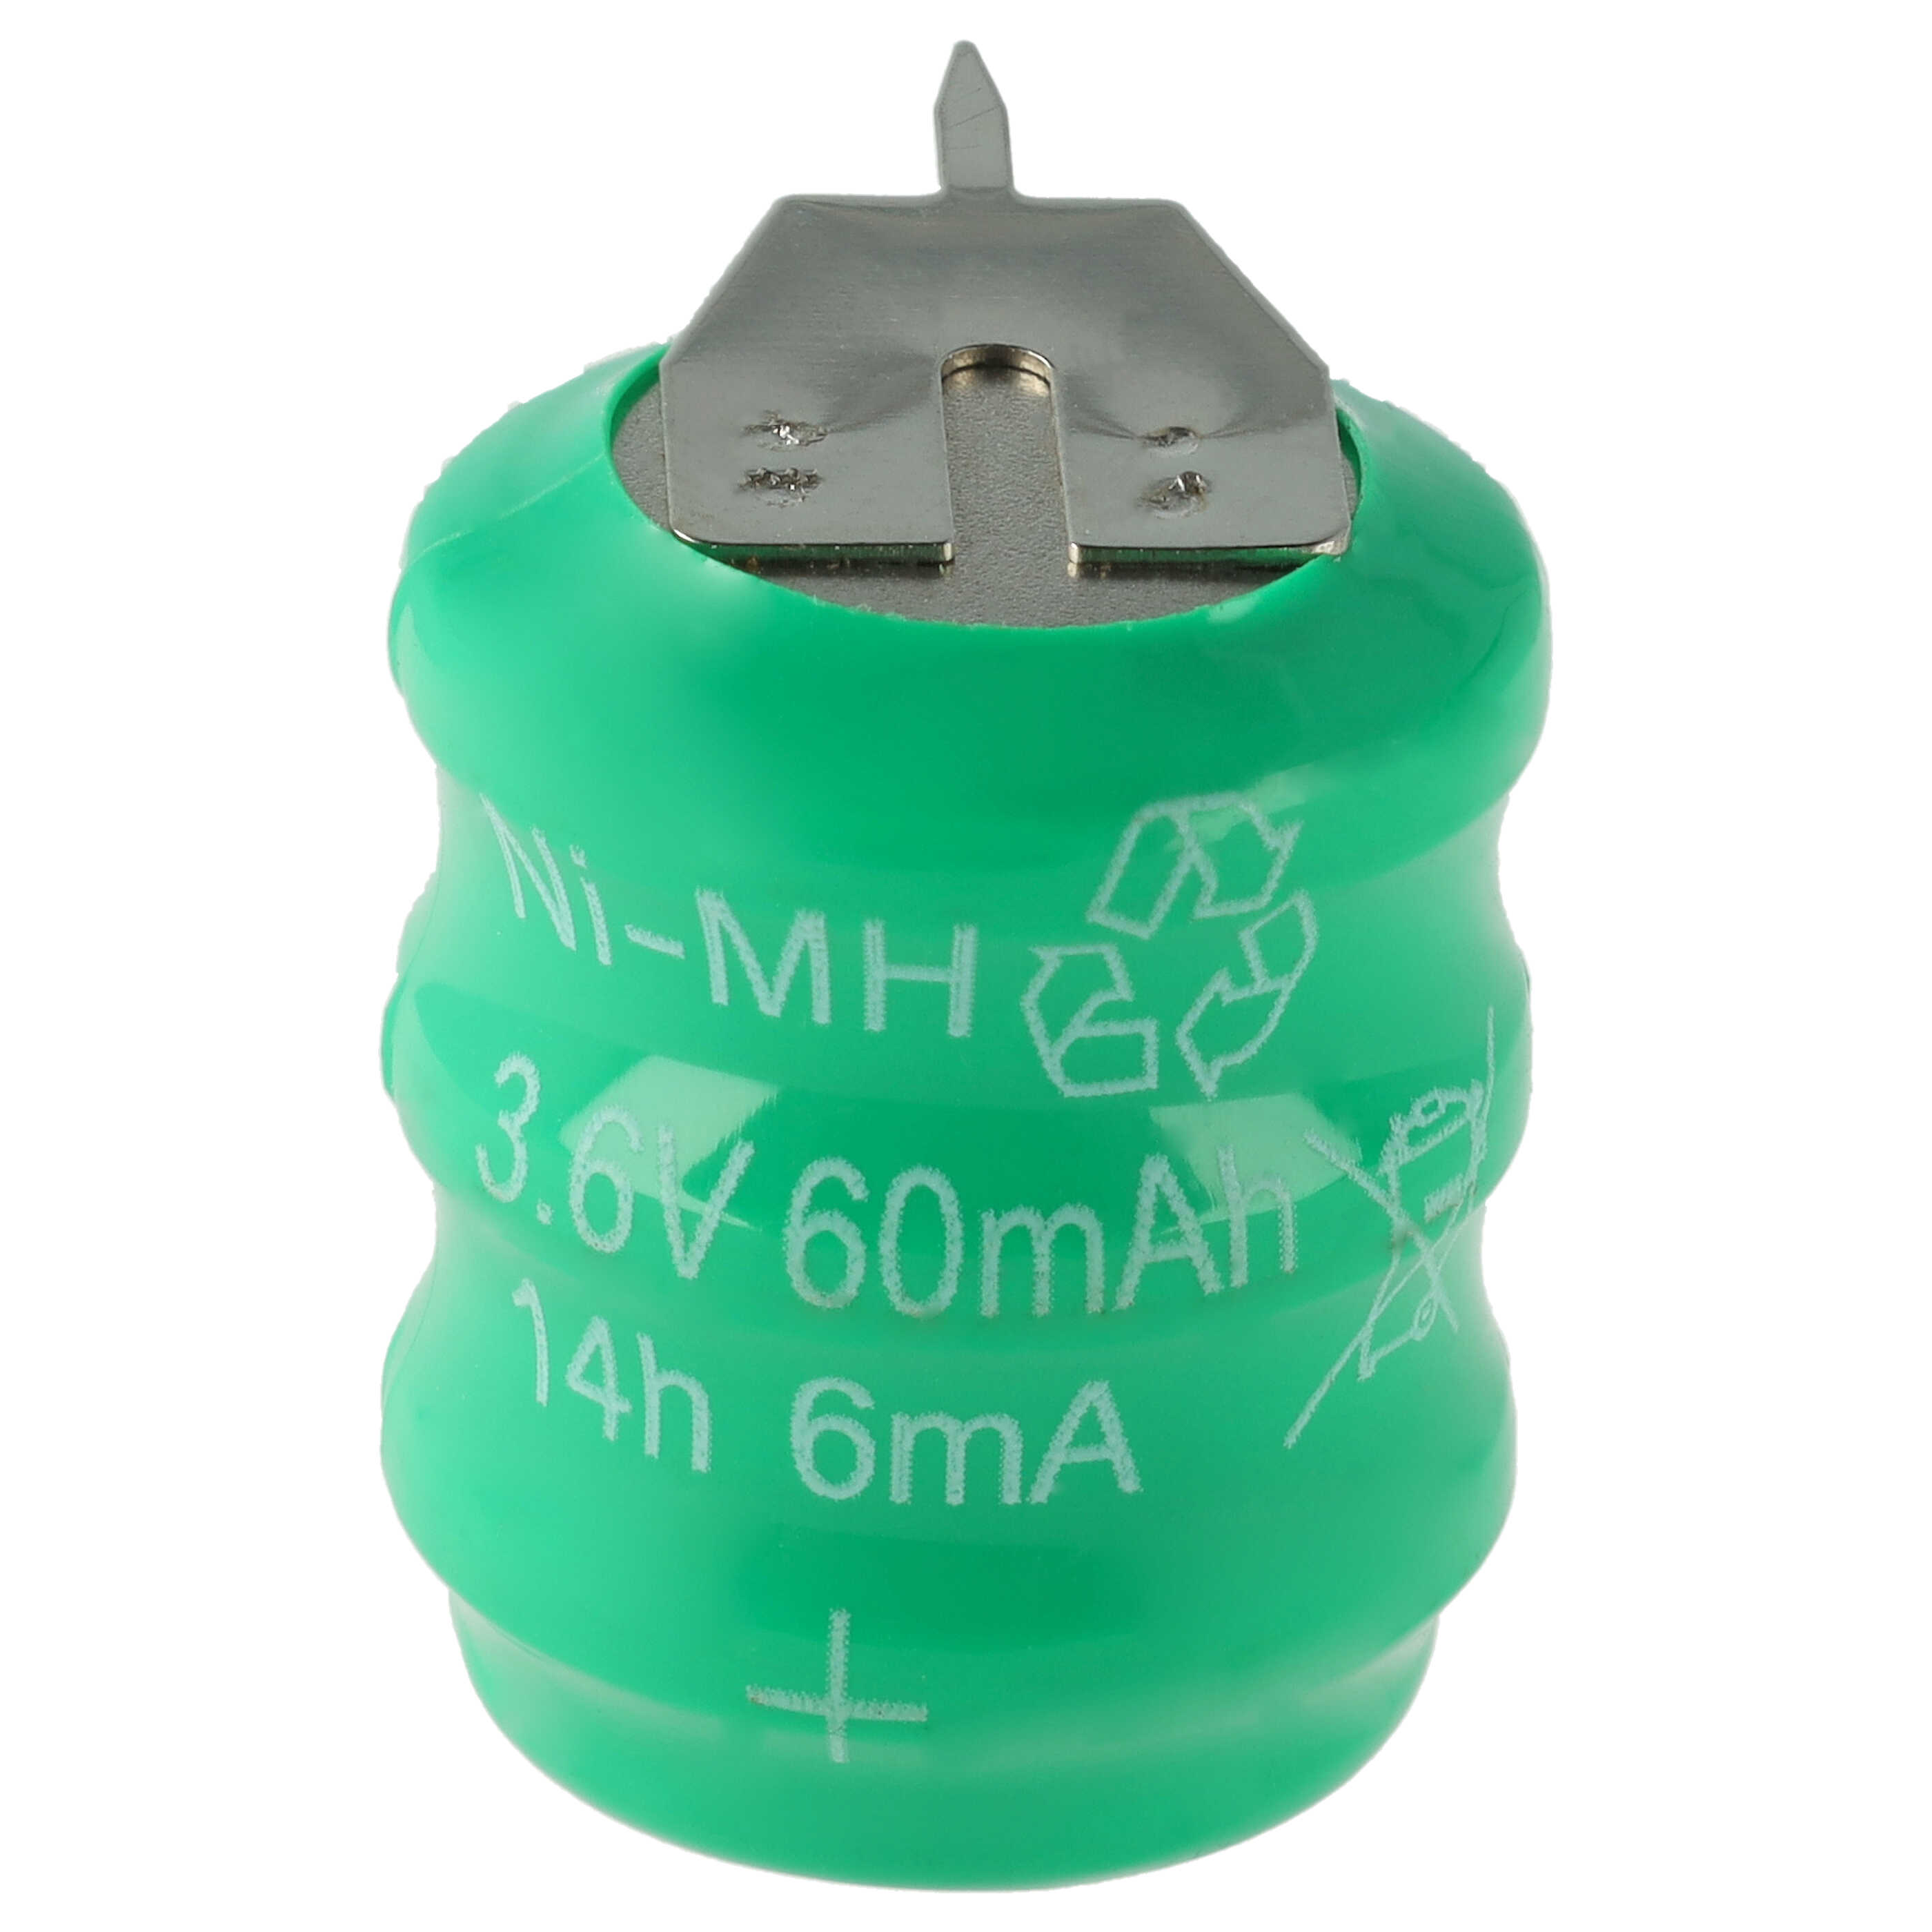 Akumulator guzikowy typ 3/V80H 3 pin do modeli, lamp solarnych itp. zamiennik 3/V80H - 60 mAh 3,6 V NiMH